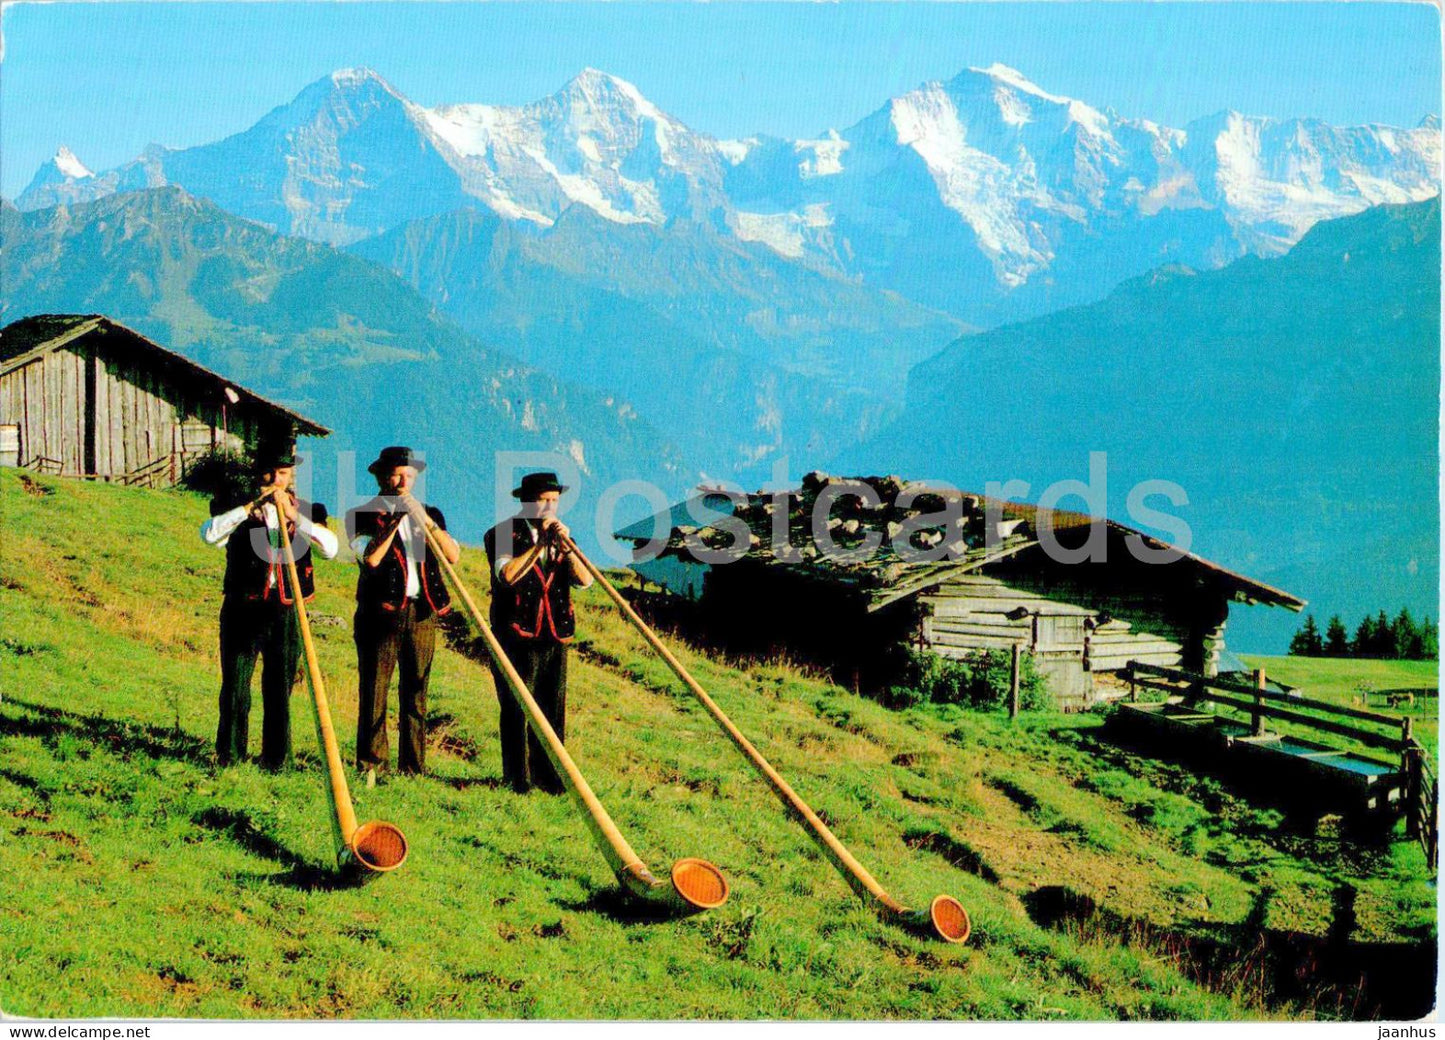 Eiger - Monch - Jungfrau - Berner Oberland - folk costume - folk music - 12566 - 1989 - Switzerland - used - JH Postcards